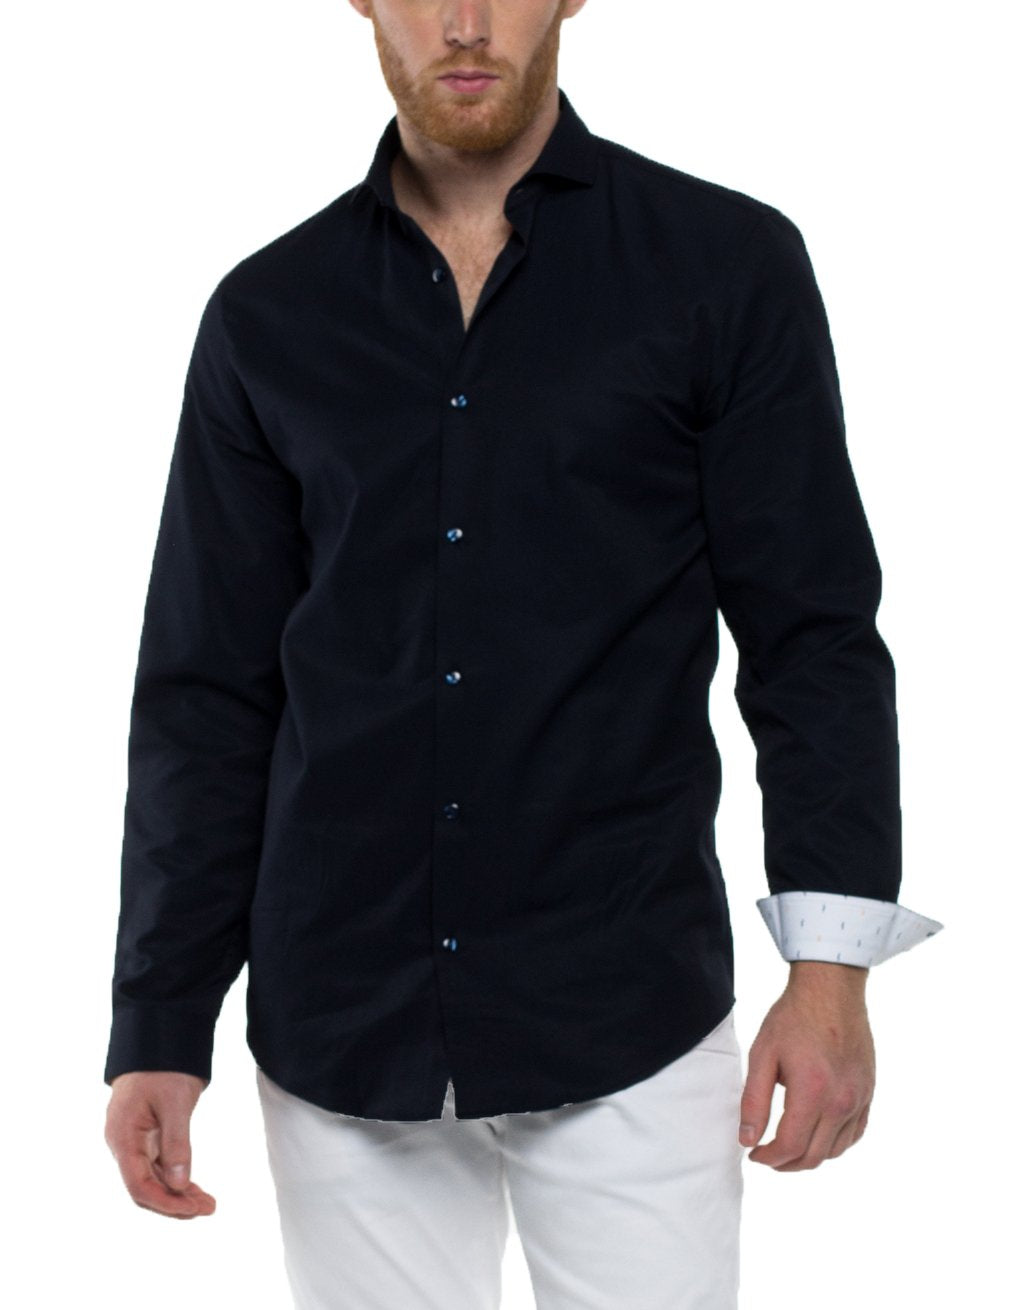 HANK Long Sleeve Solid Shirt